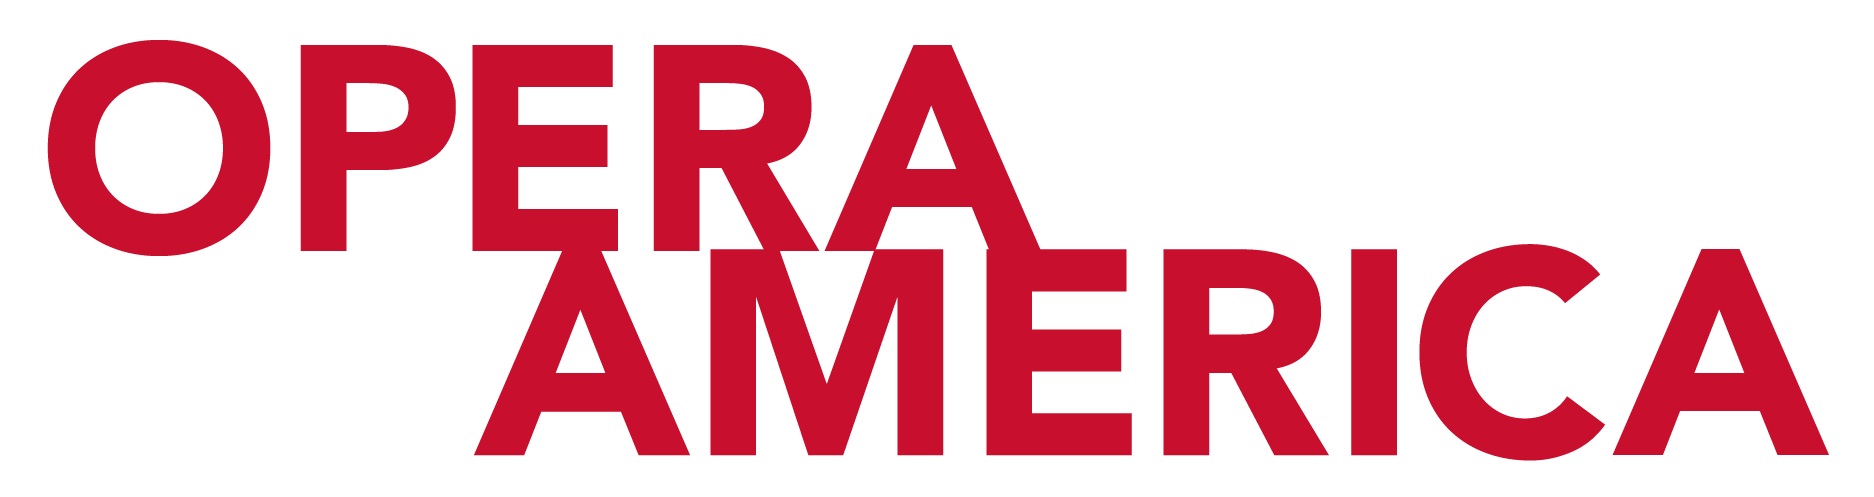 Opera America Logo